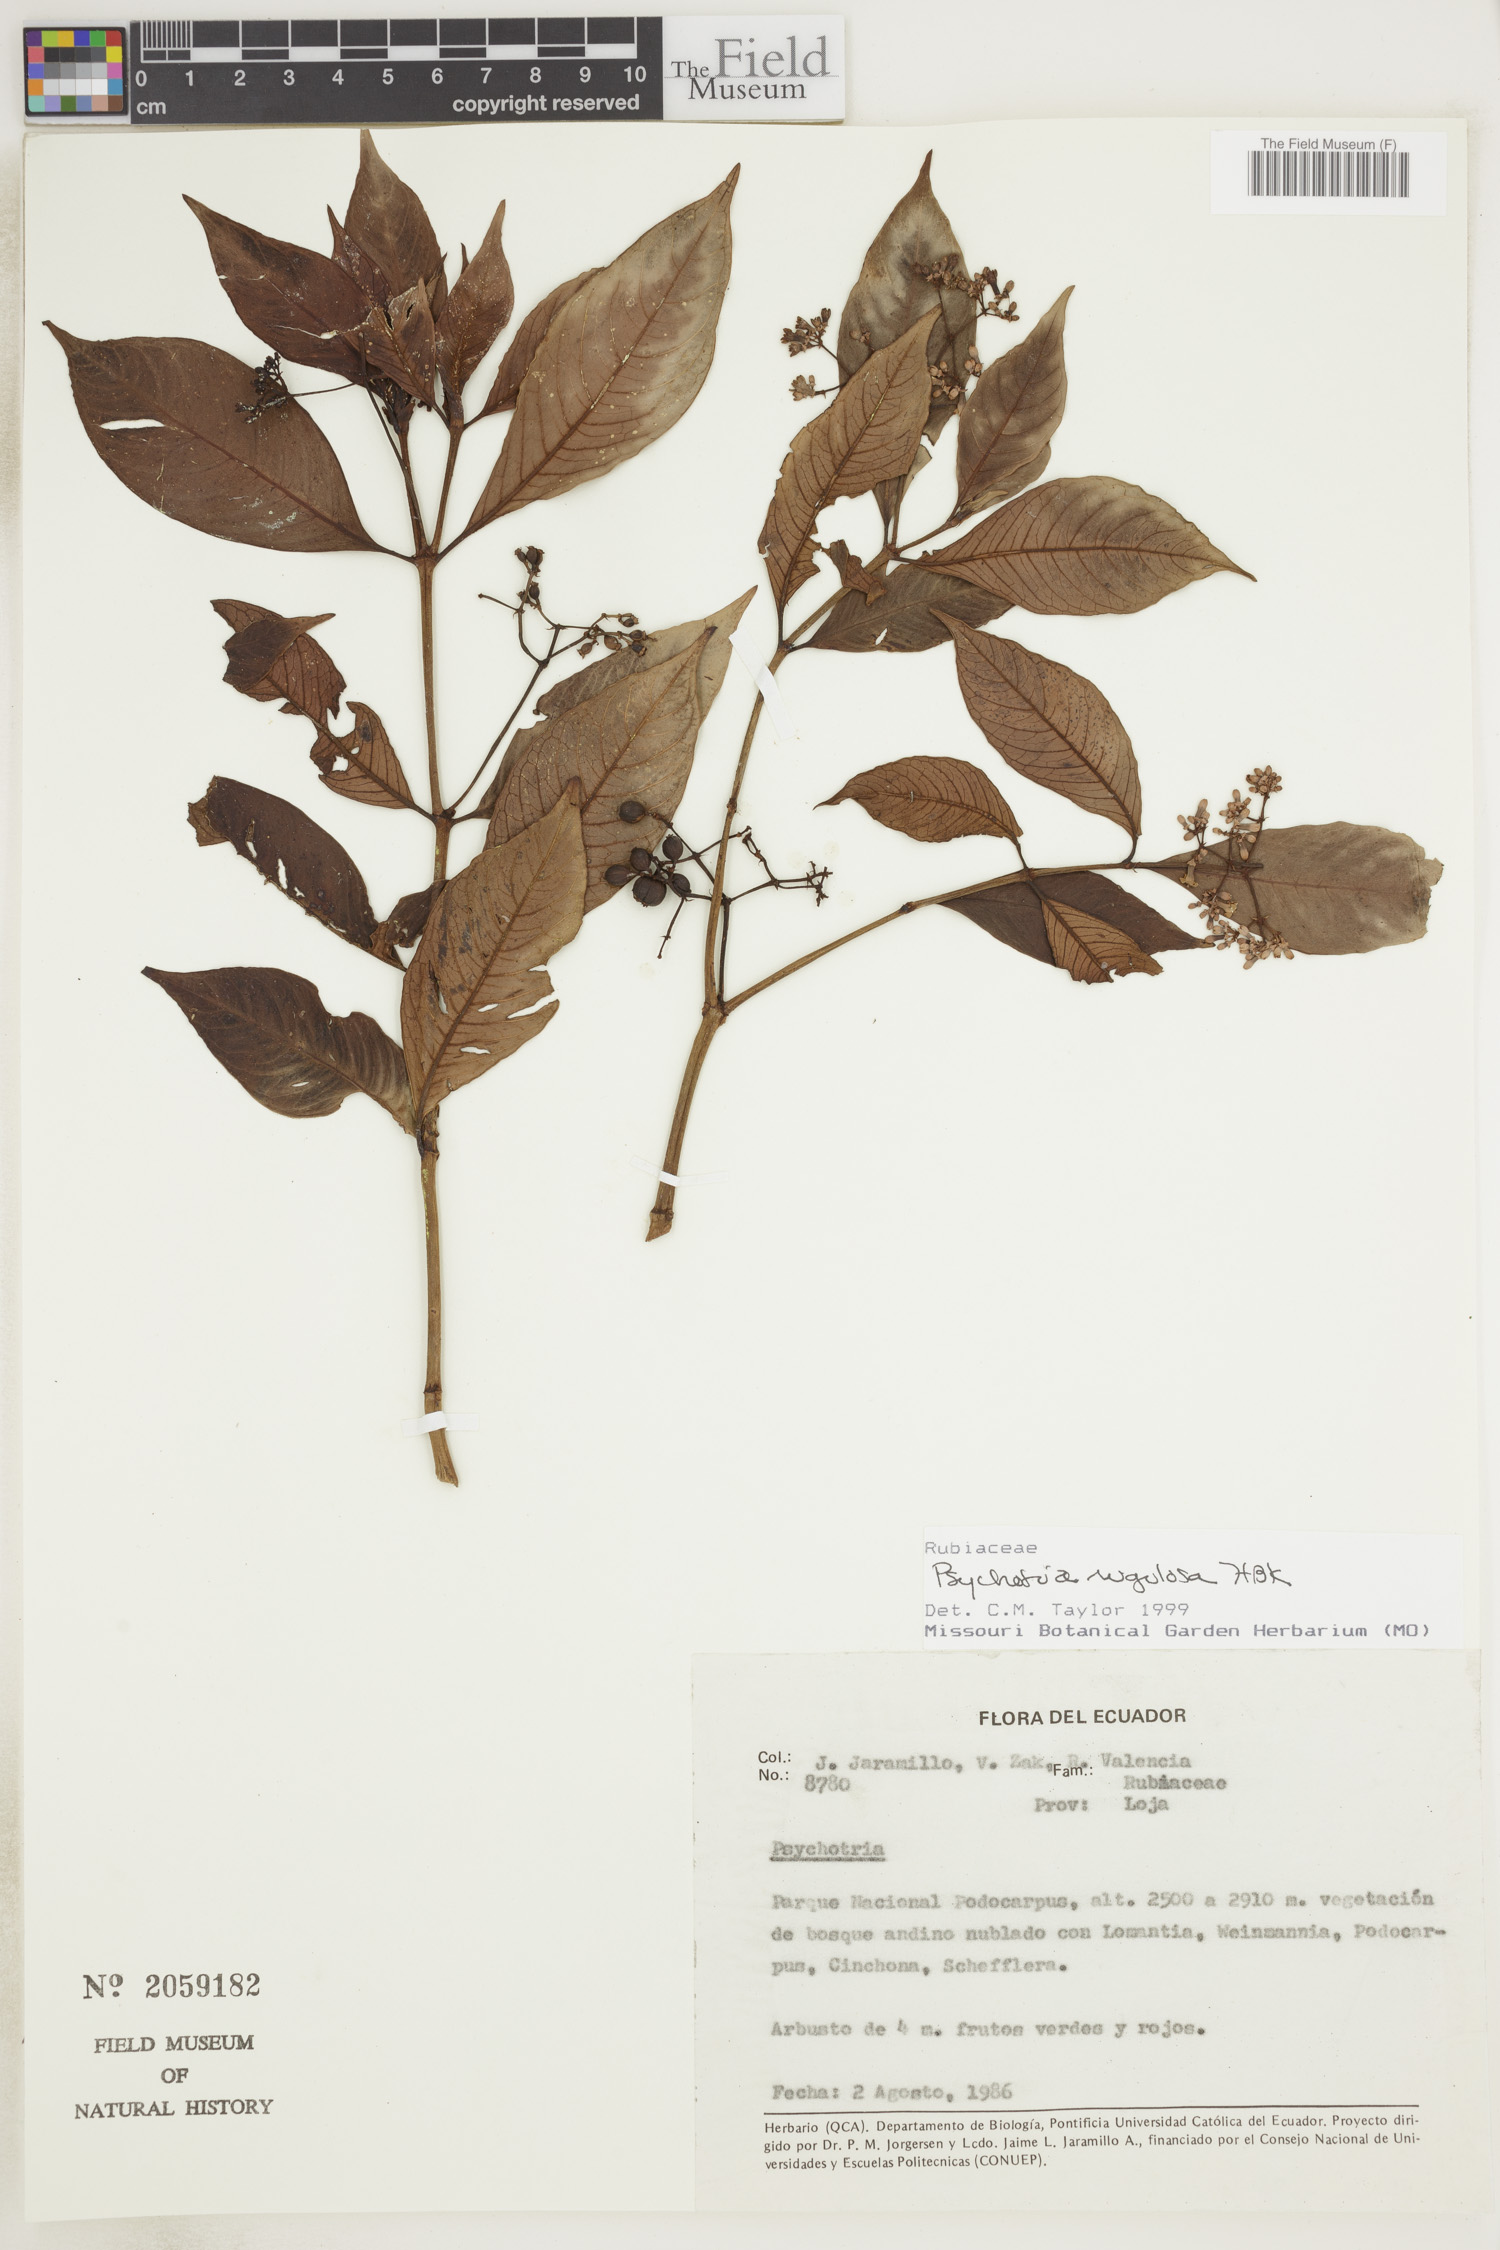 Psychotria rugulosa image